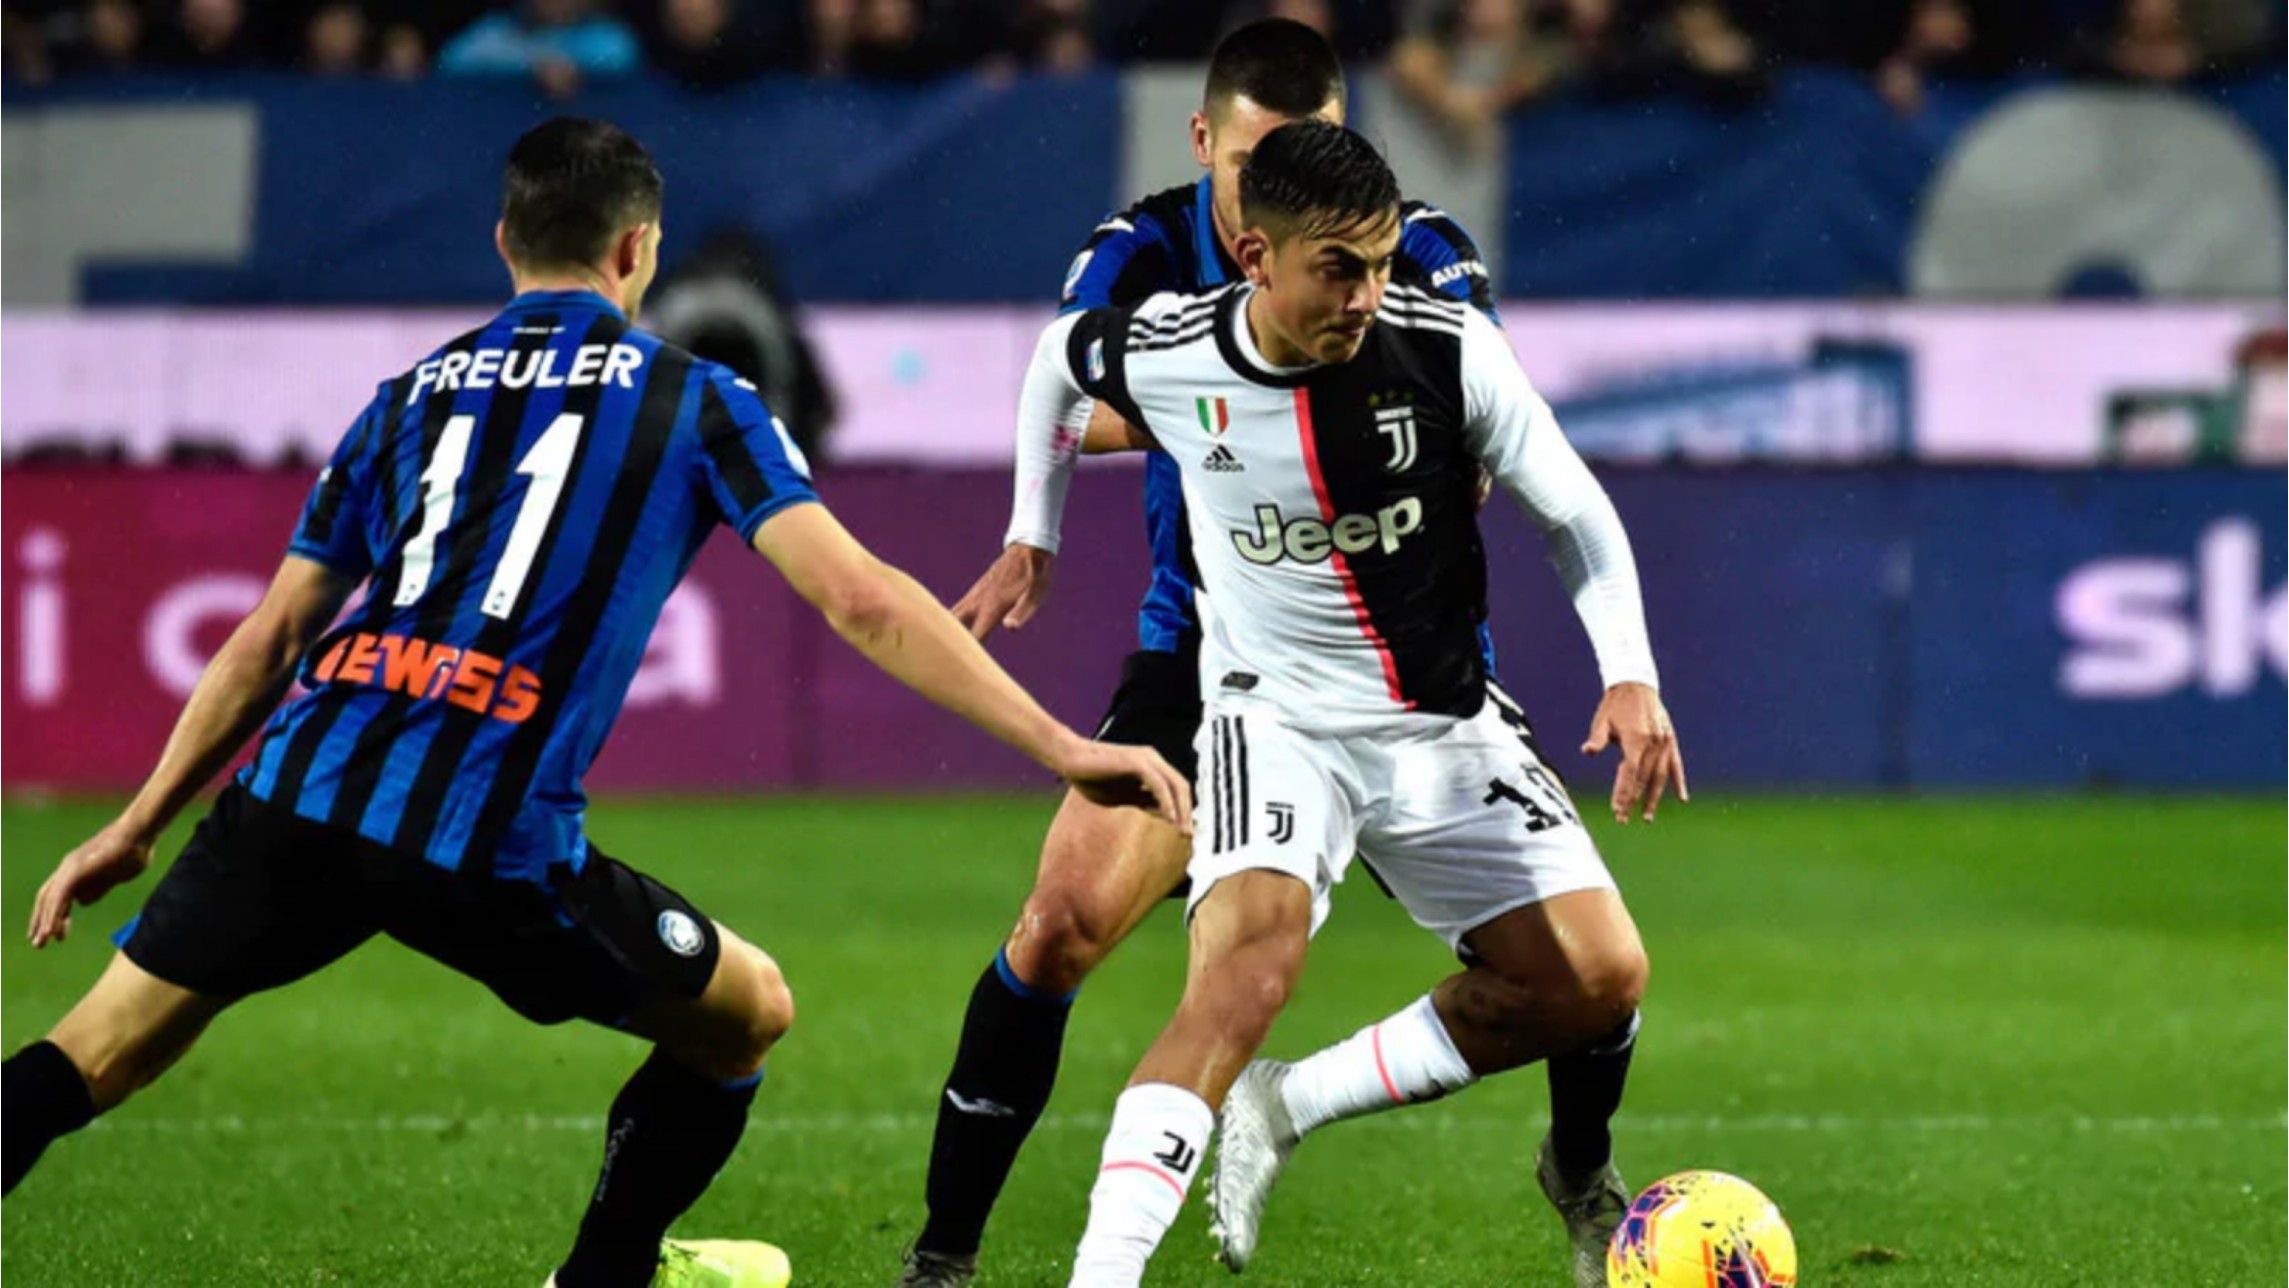 Dybala et De Ligt de retour, les compos officielles de Juventus-Atalanta